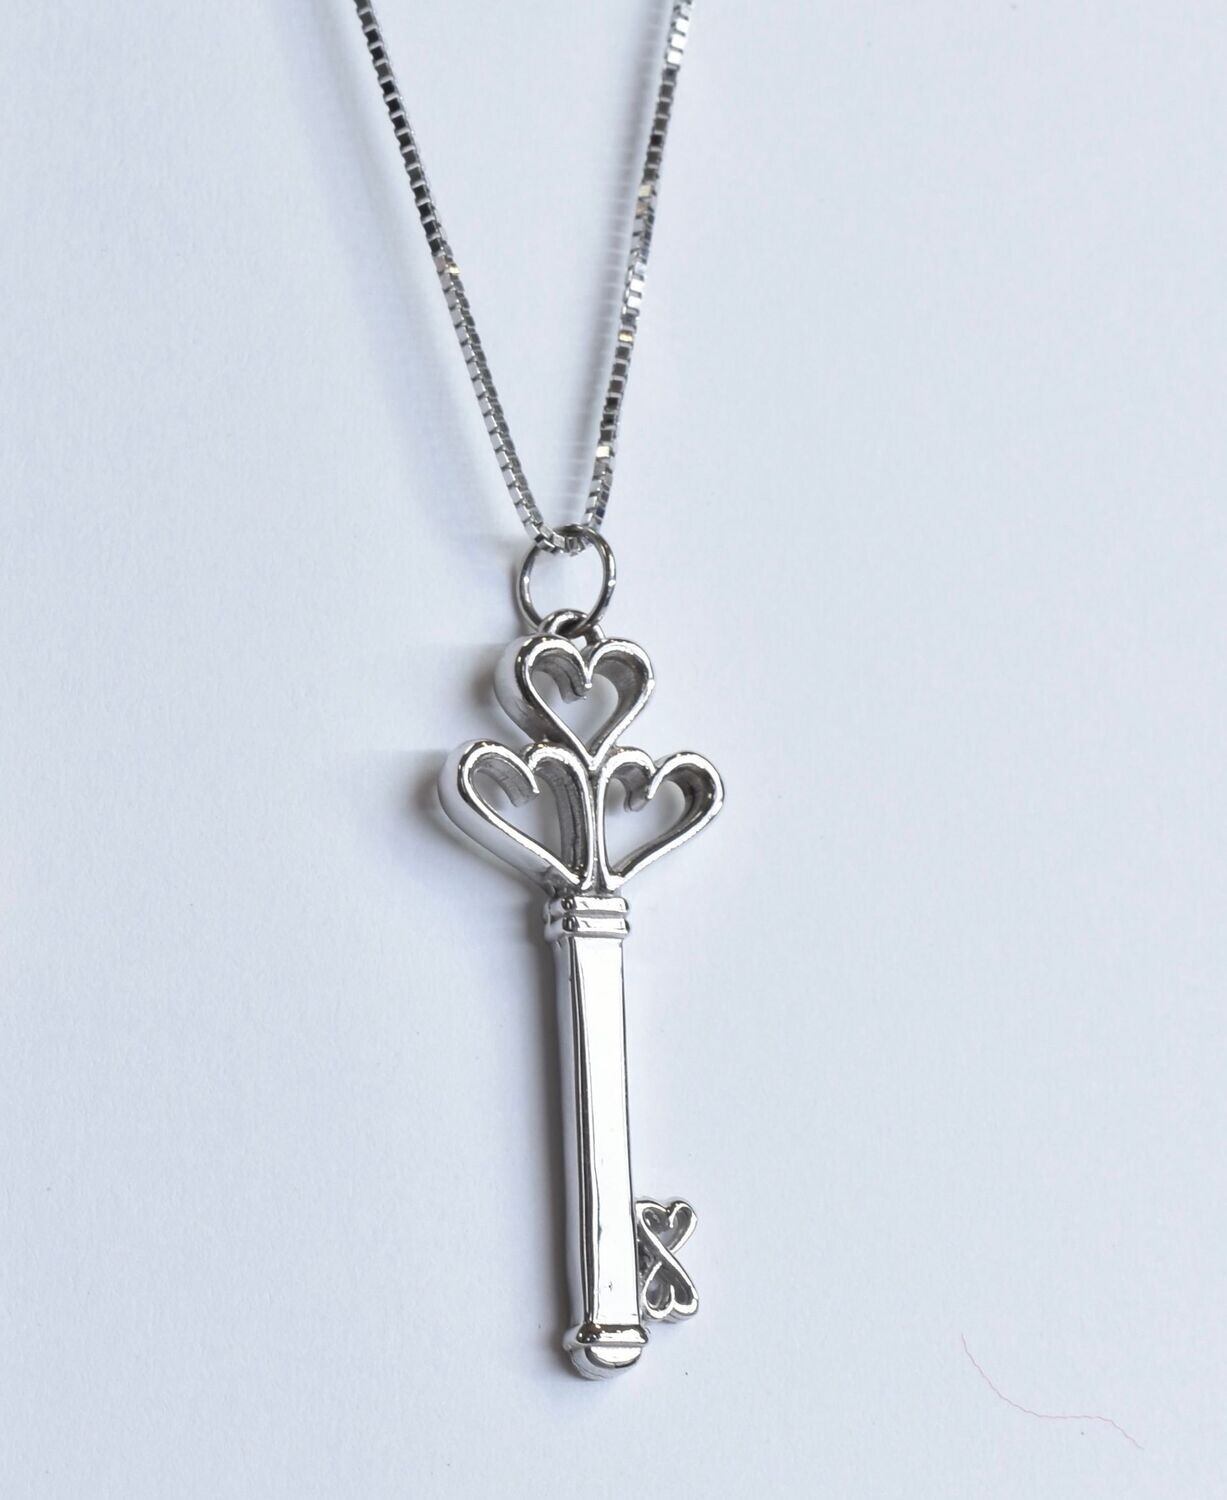 14kt White Gold Heart Key Necklace